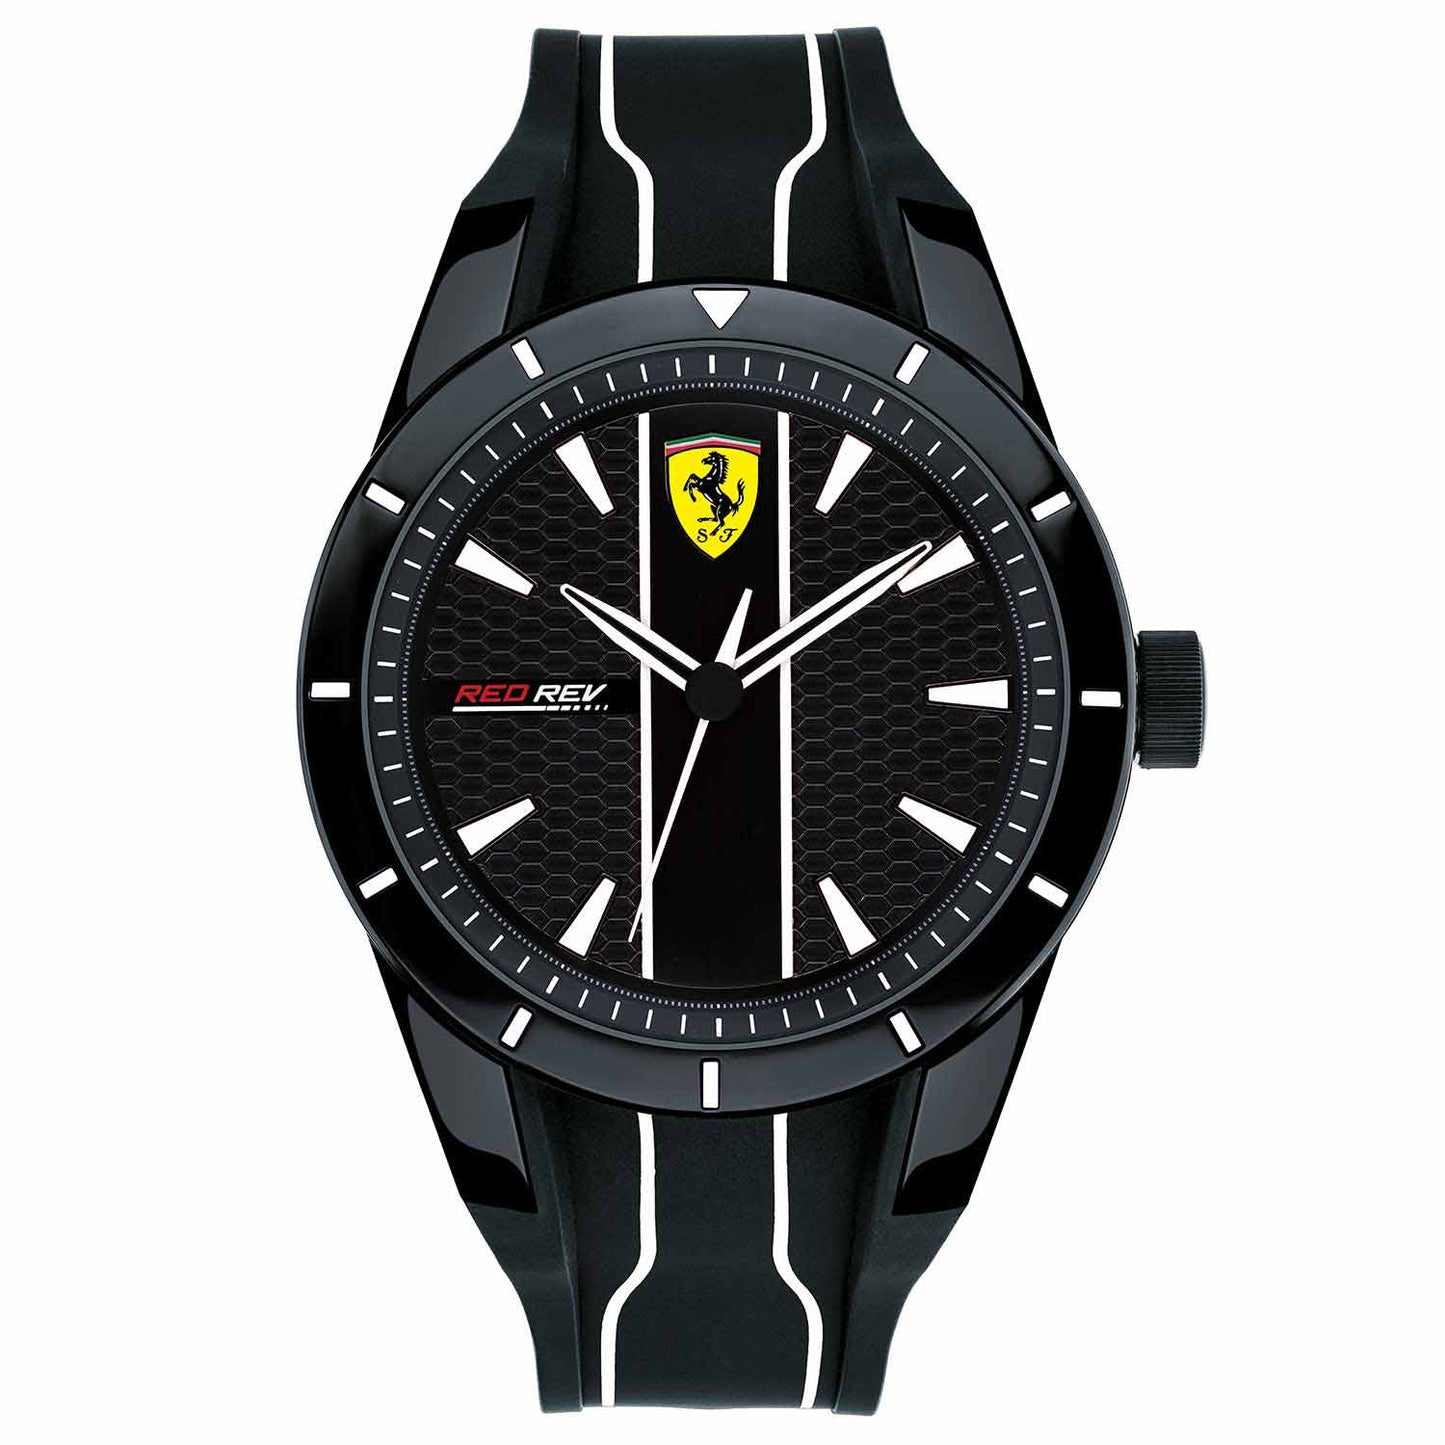 Reloj deportivo Scuderia Ferrari de hombre de caucho negro y blanco